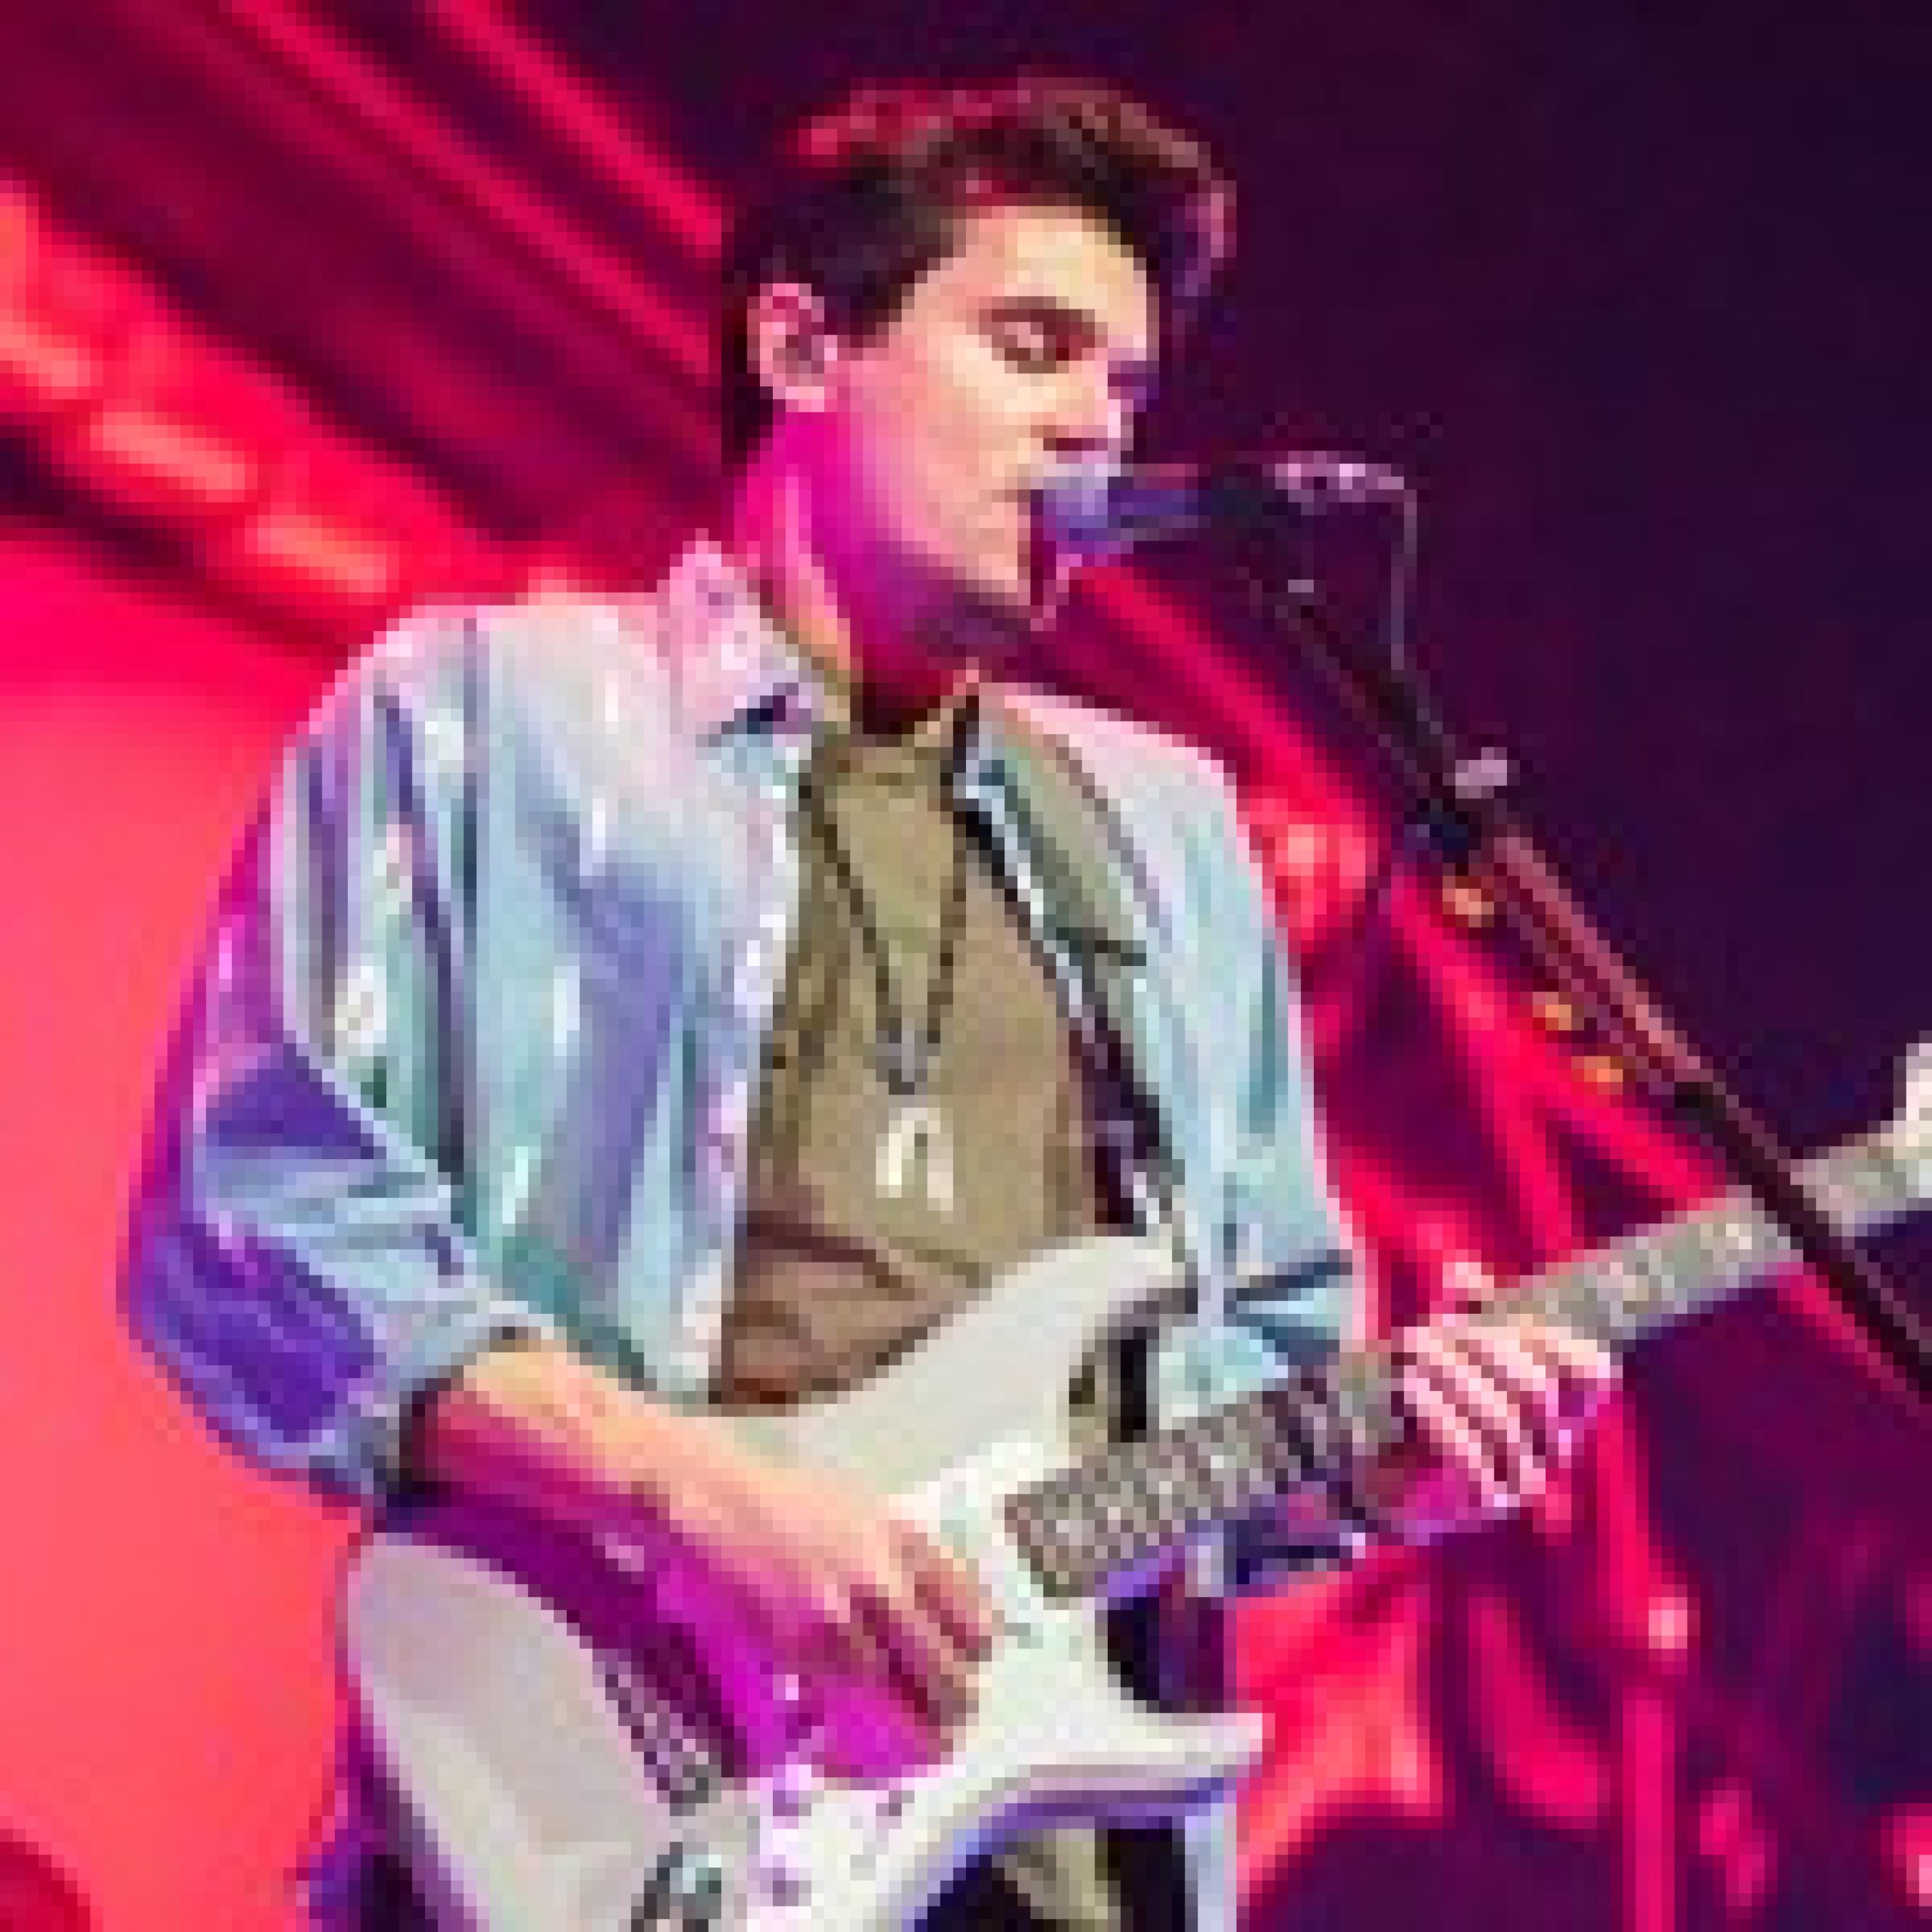 John Mayer Drops ‘Sob Rock’ Single ‘Last Train Home’: Stream It Now